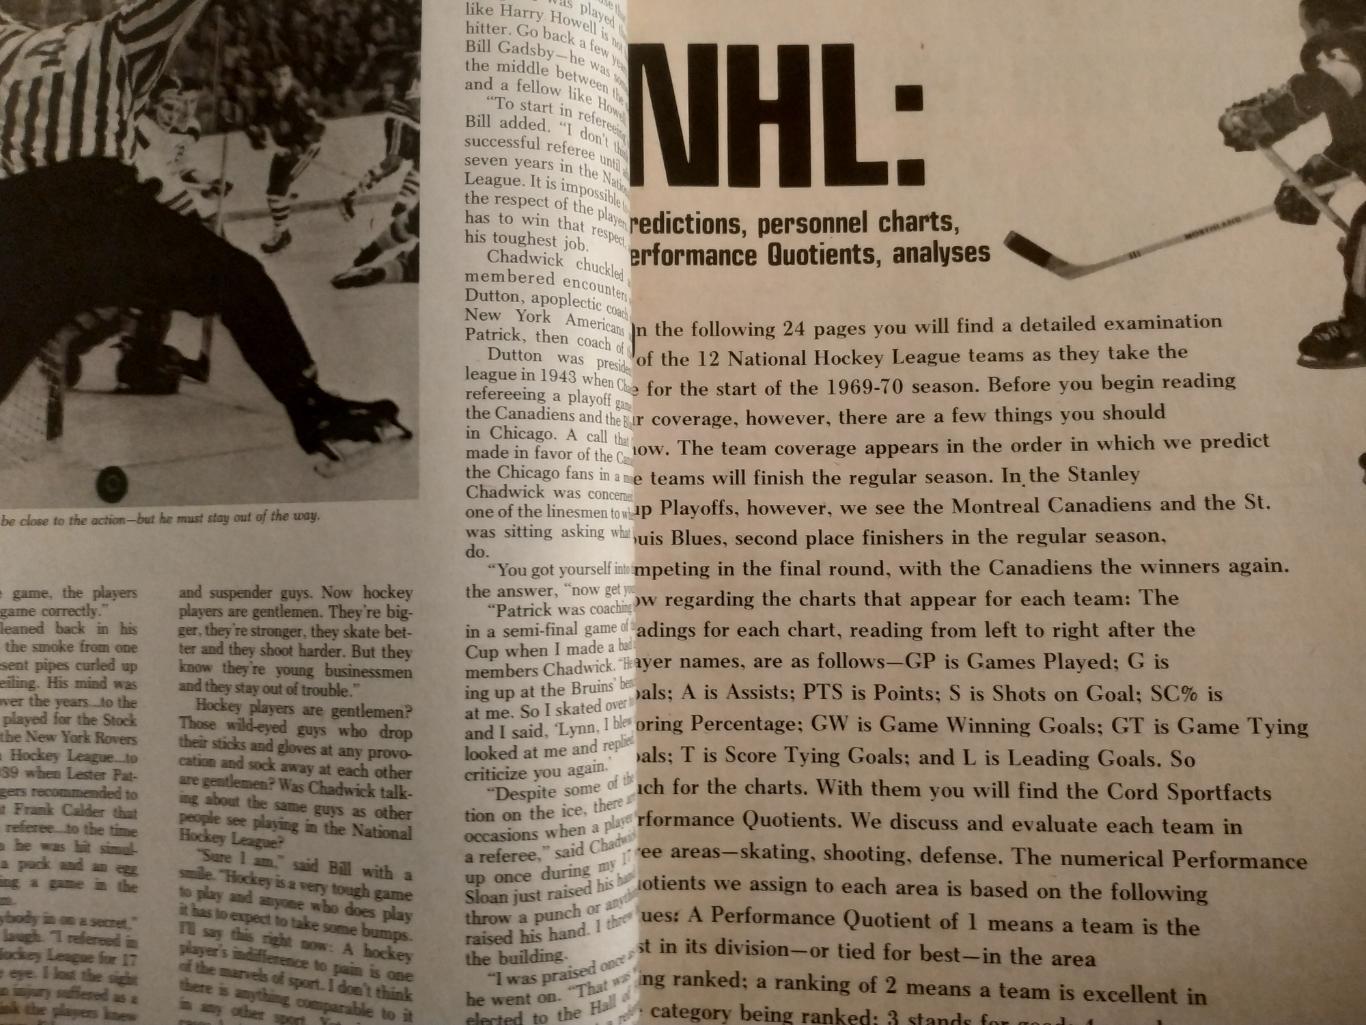 ХОККЕЙ СПРАВОЧНИК ЕЖЕГОДНИК НХЛ NHL WINTER 1970 HOCKEY GUIDE CORD SPORTFACKTS 3